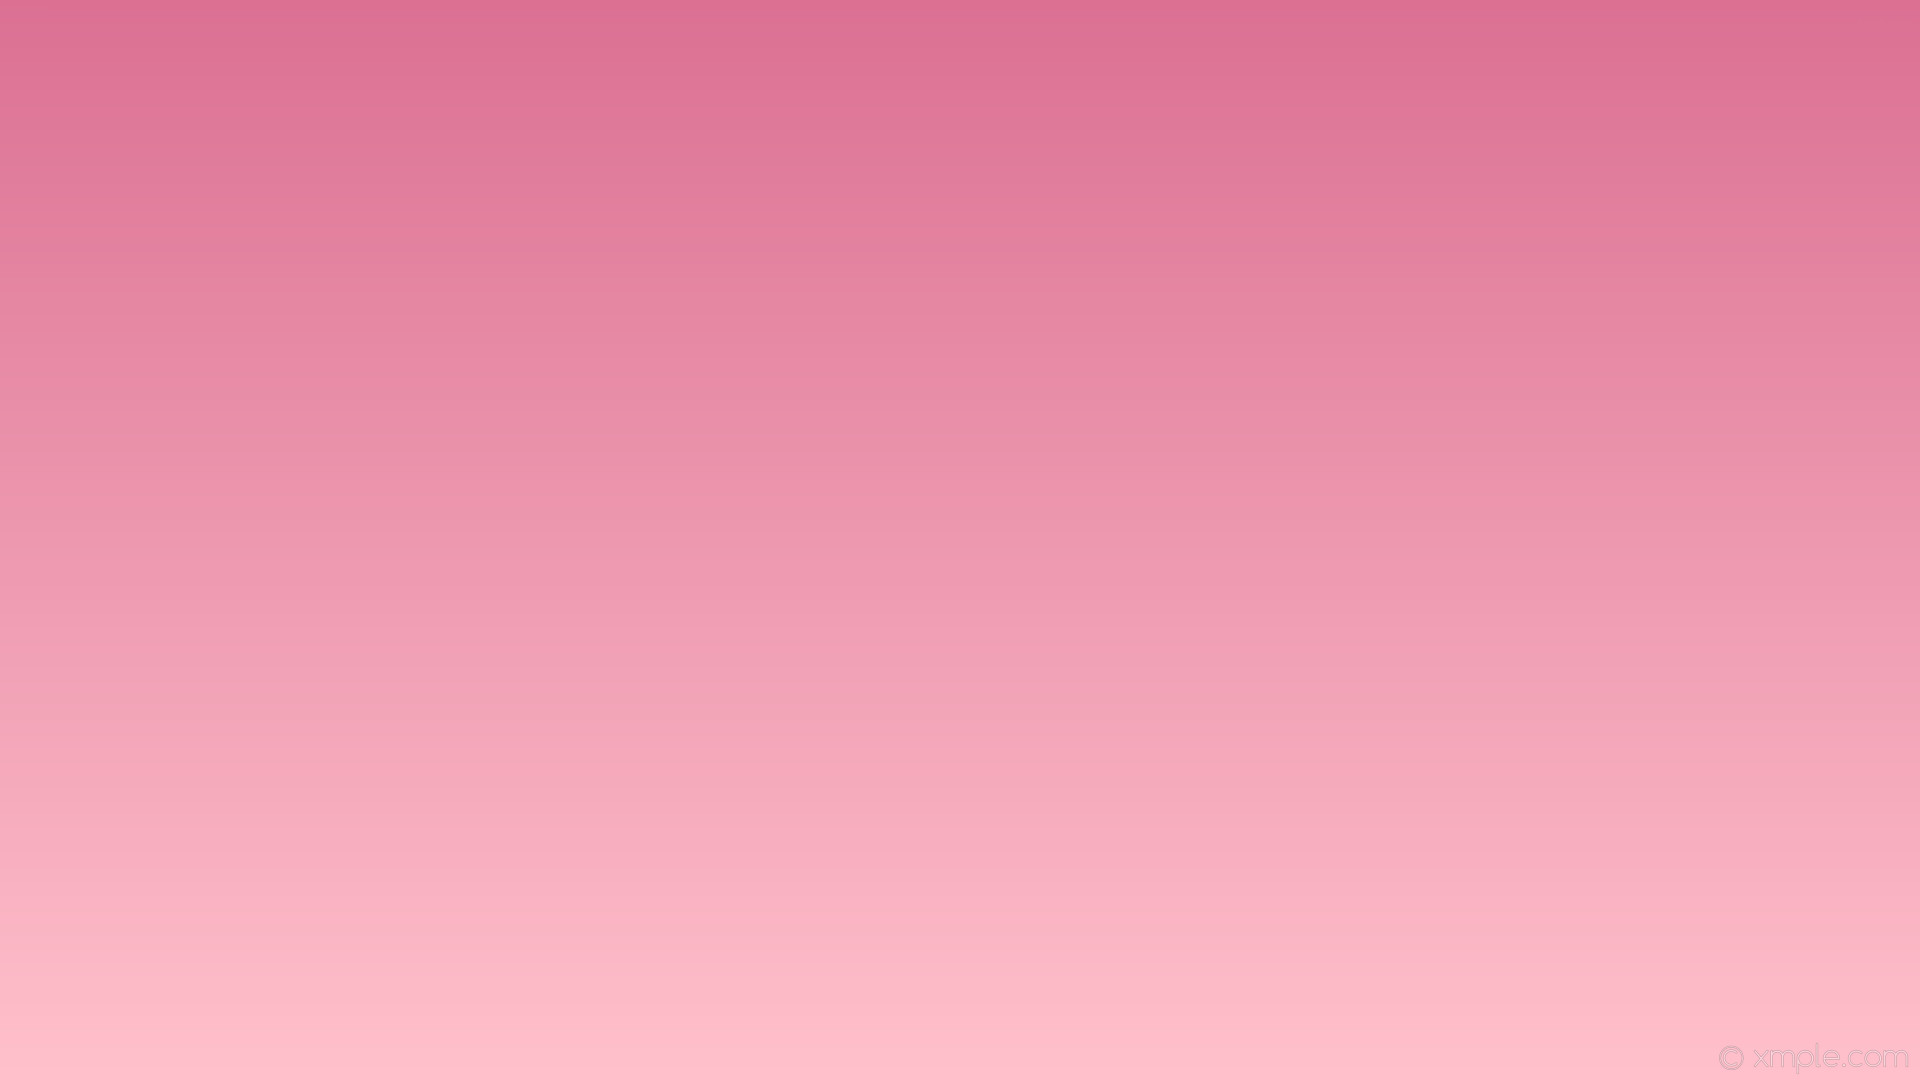 1920x1080 wallpaper pink linear gradient pale violet red #ffc0cb #db7093 270Â°